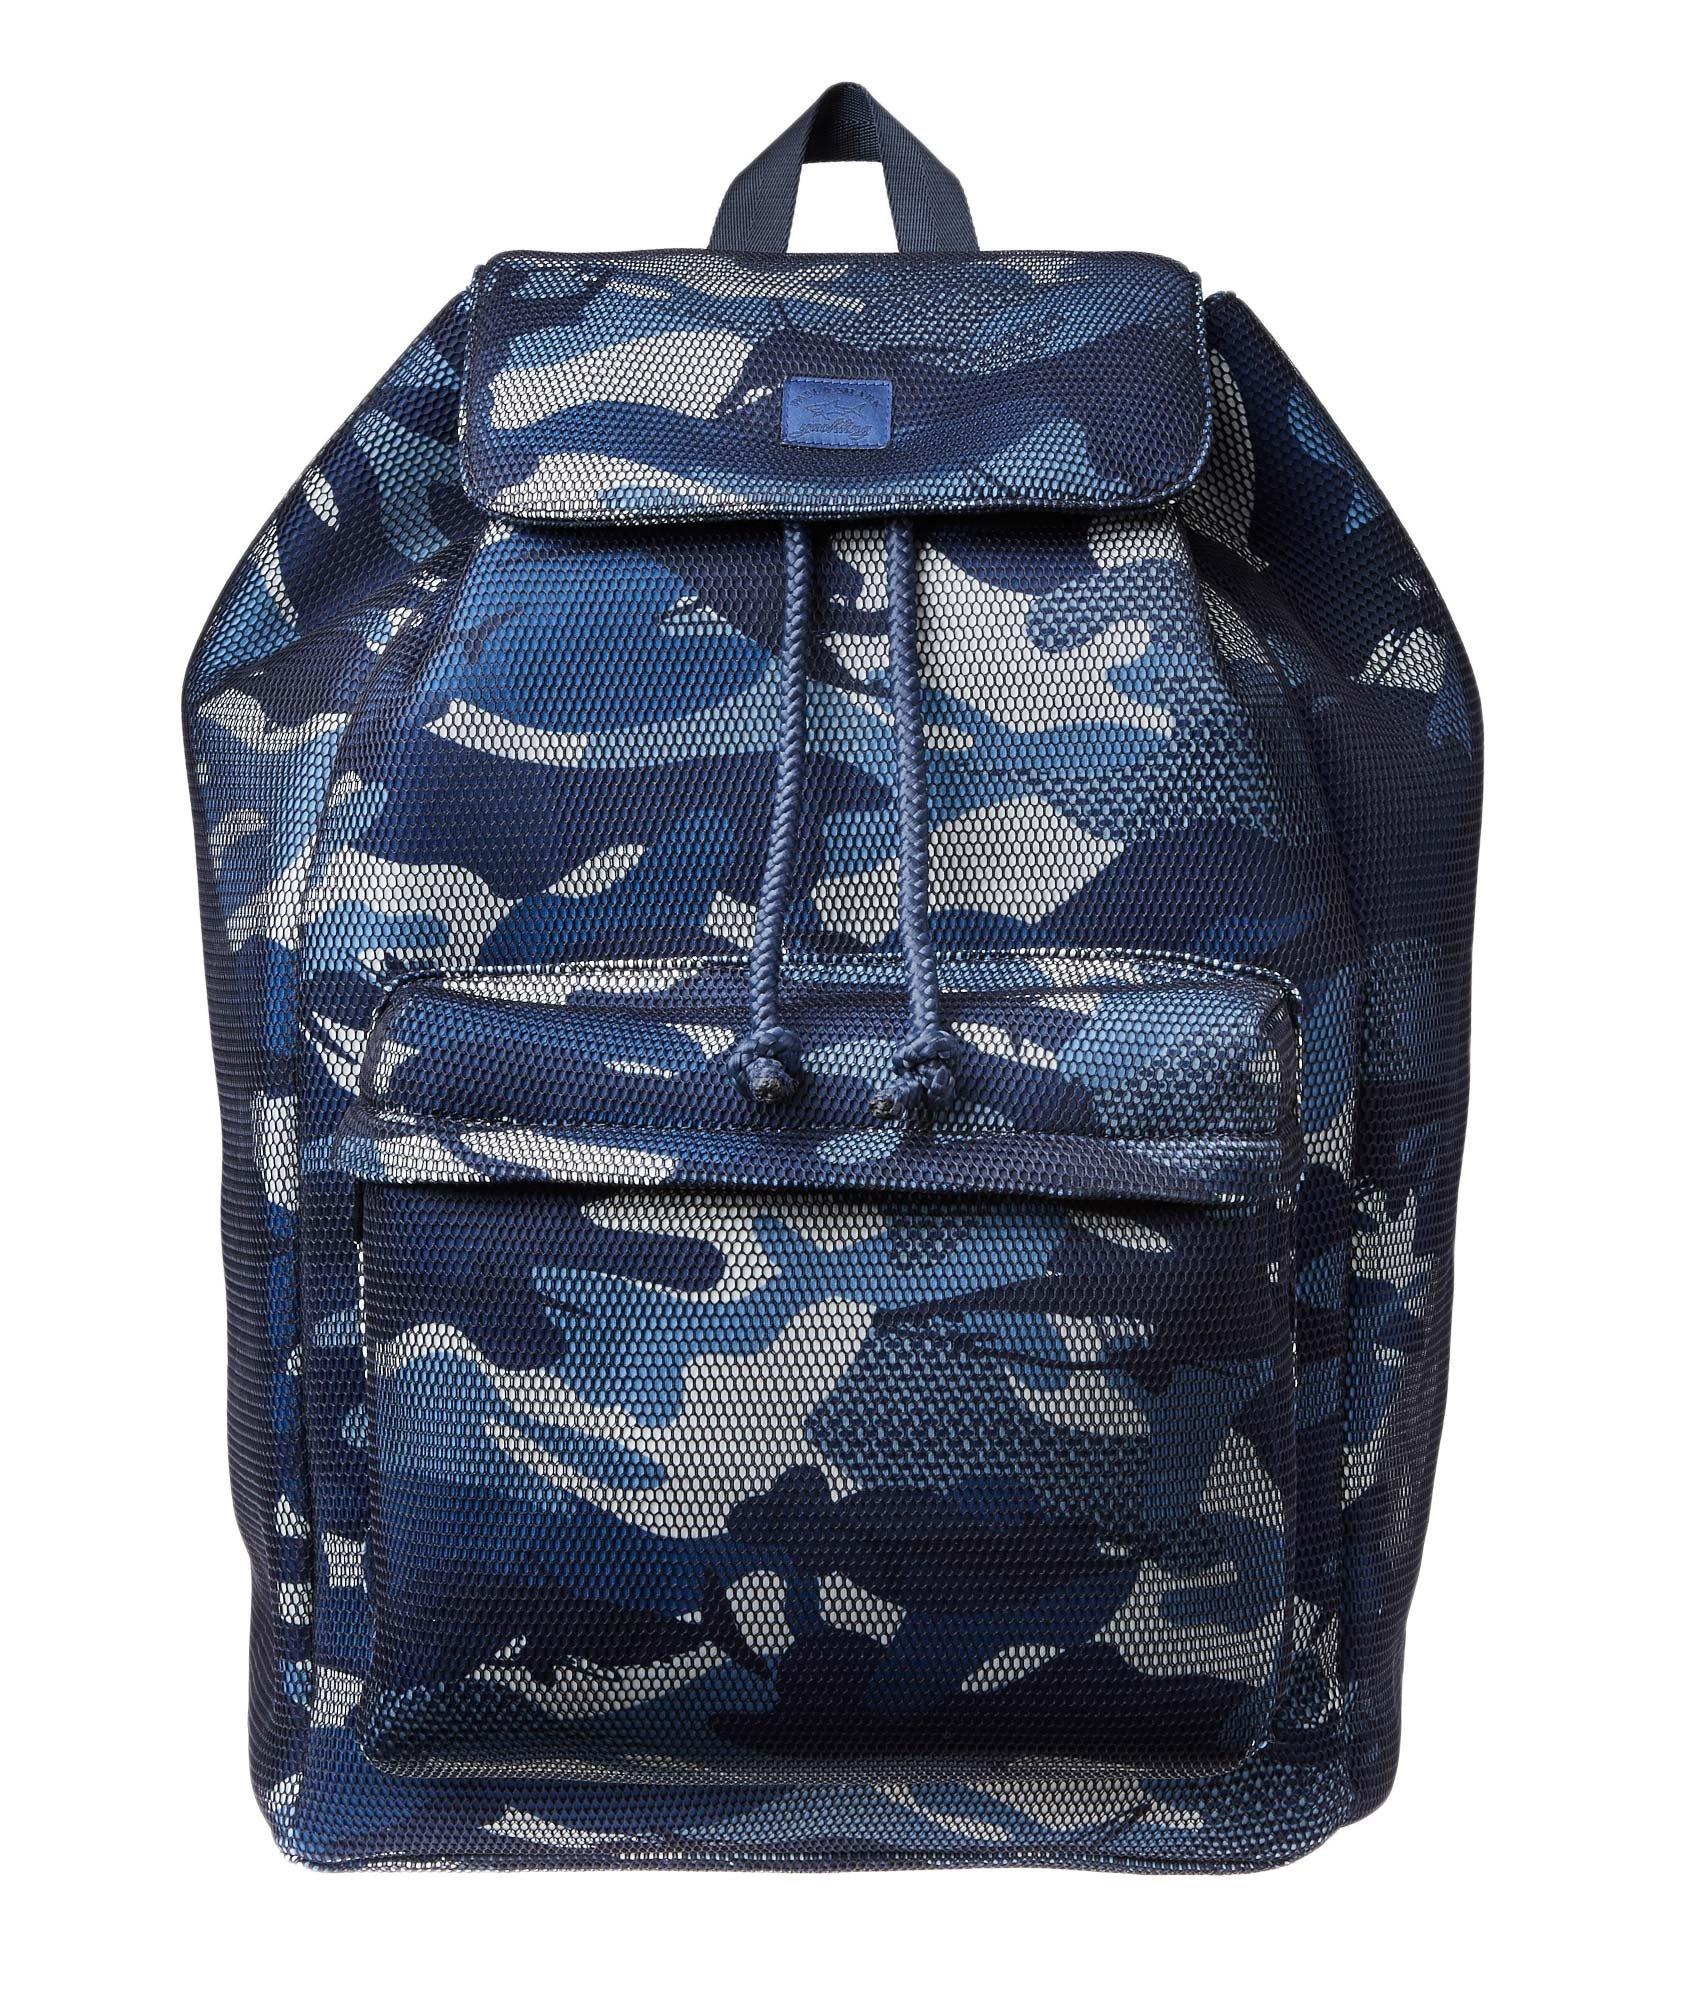 Mesh Camouflage Backpack image 0